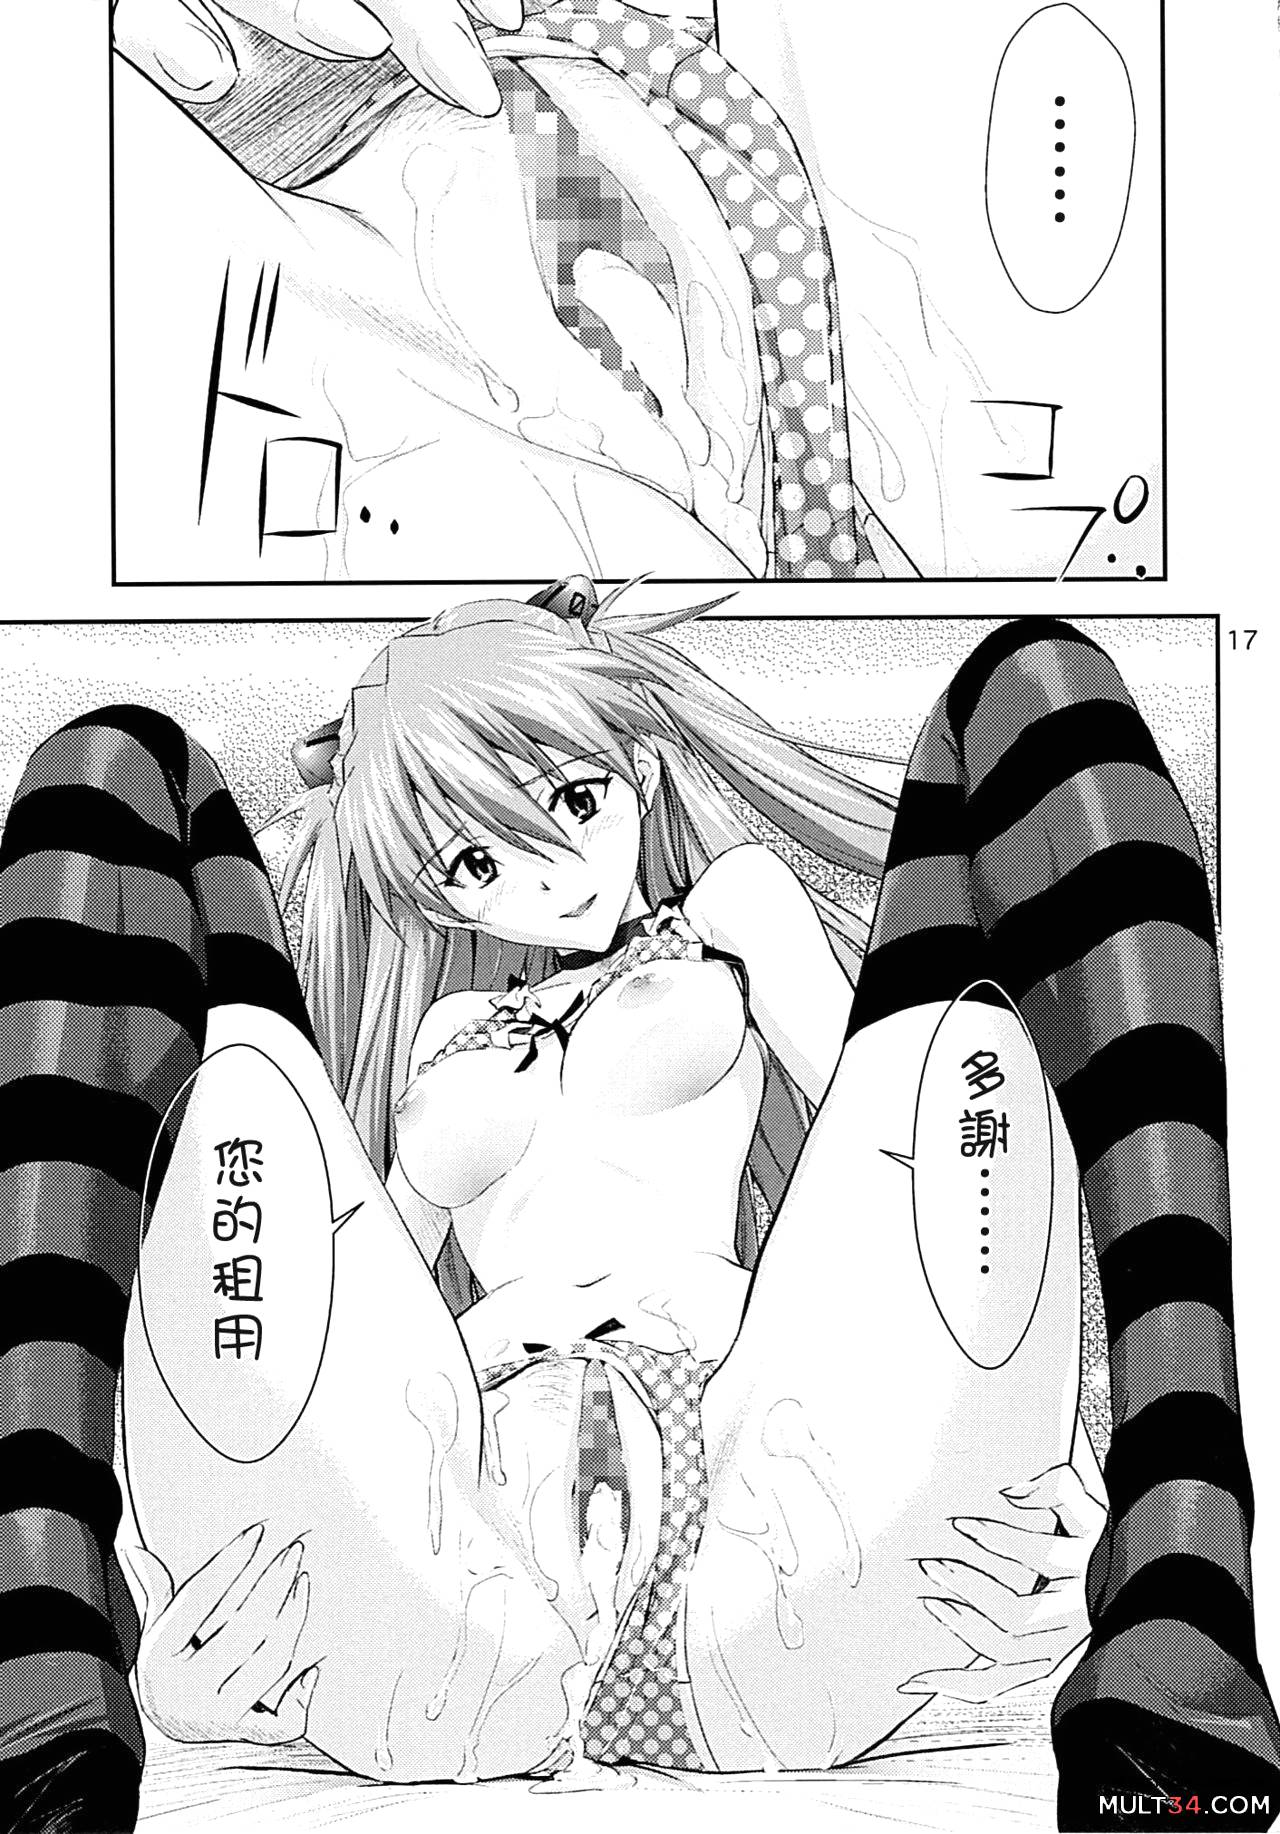 Rental Asuka page 17